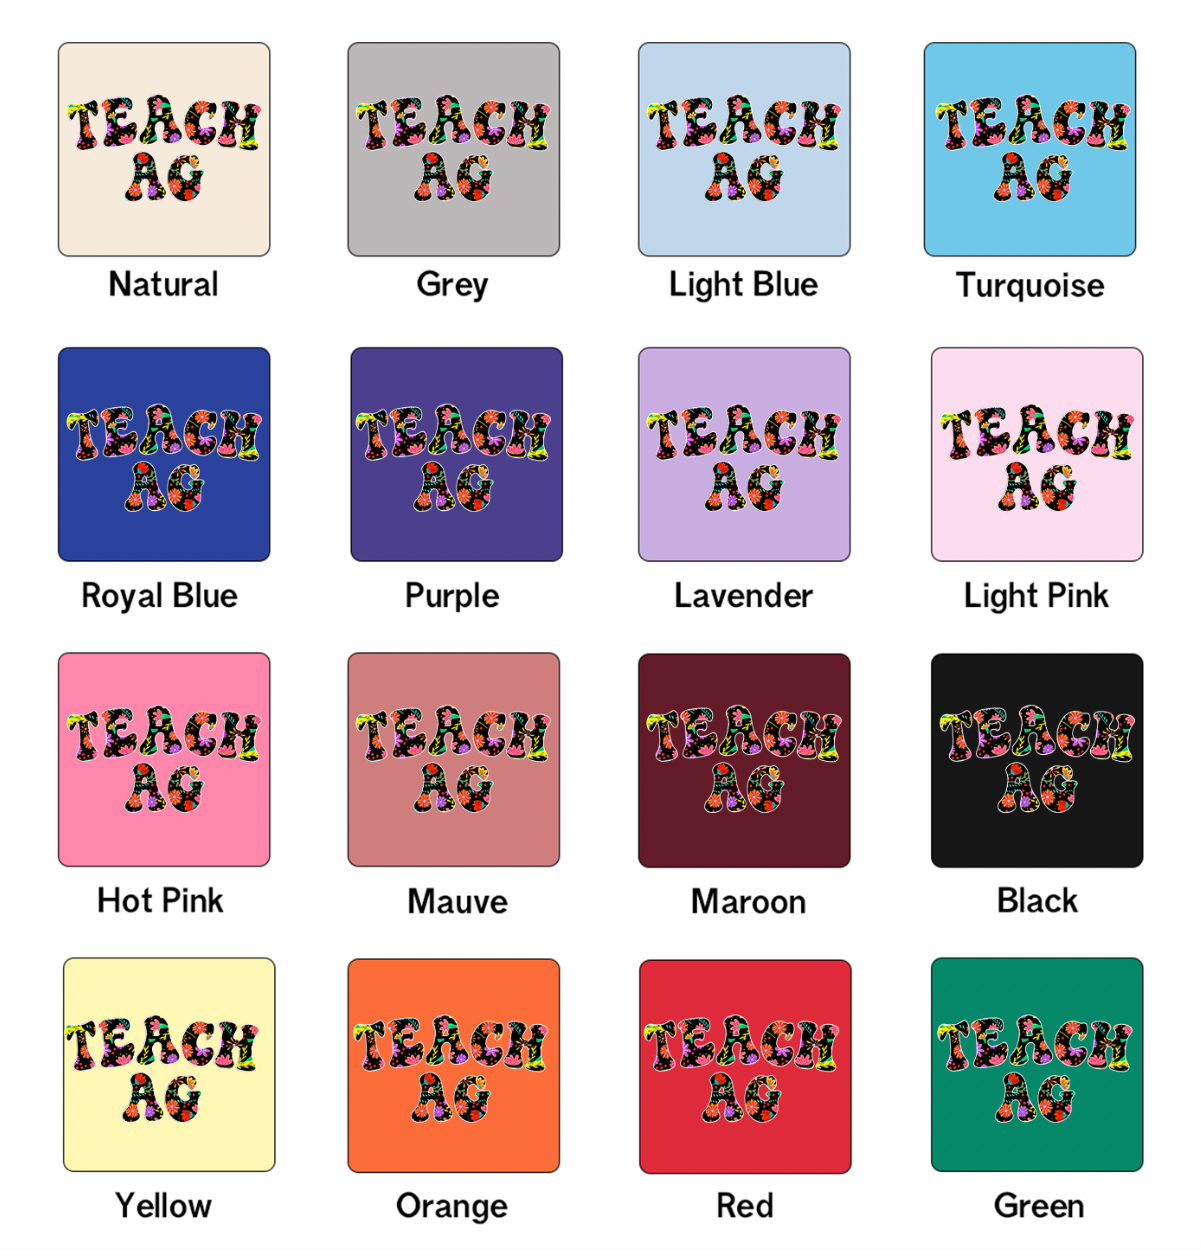 Fiesta Teach Ag One Piece/T-Shirt (Newborn - Youth XL) - Multiple Colors!